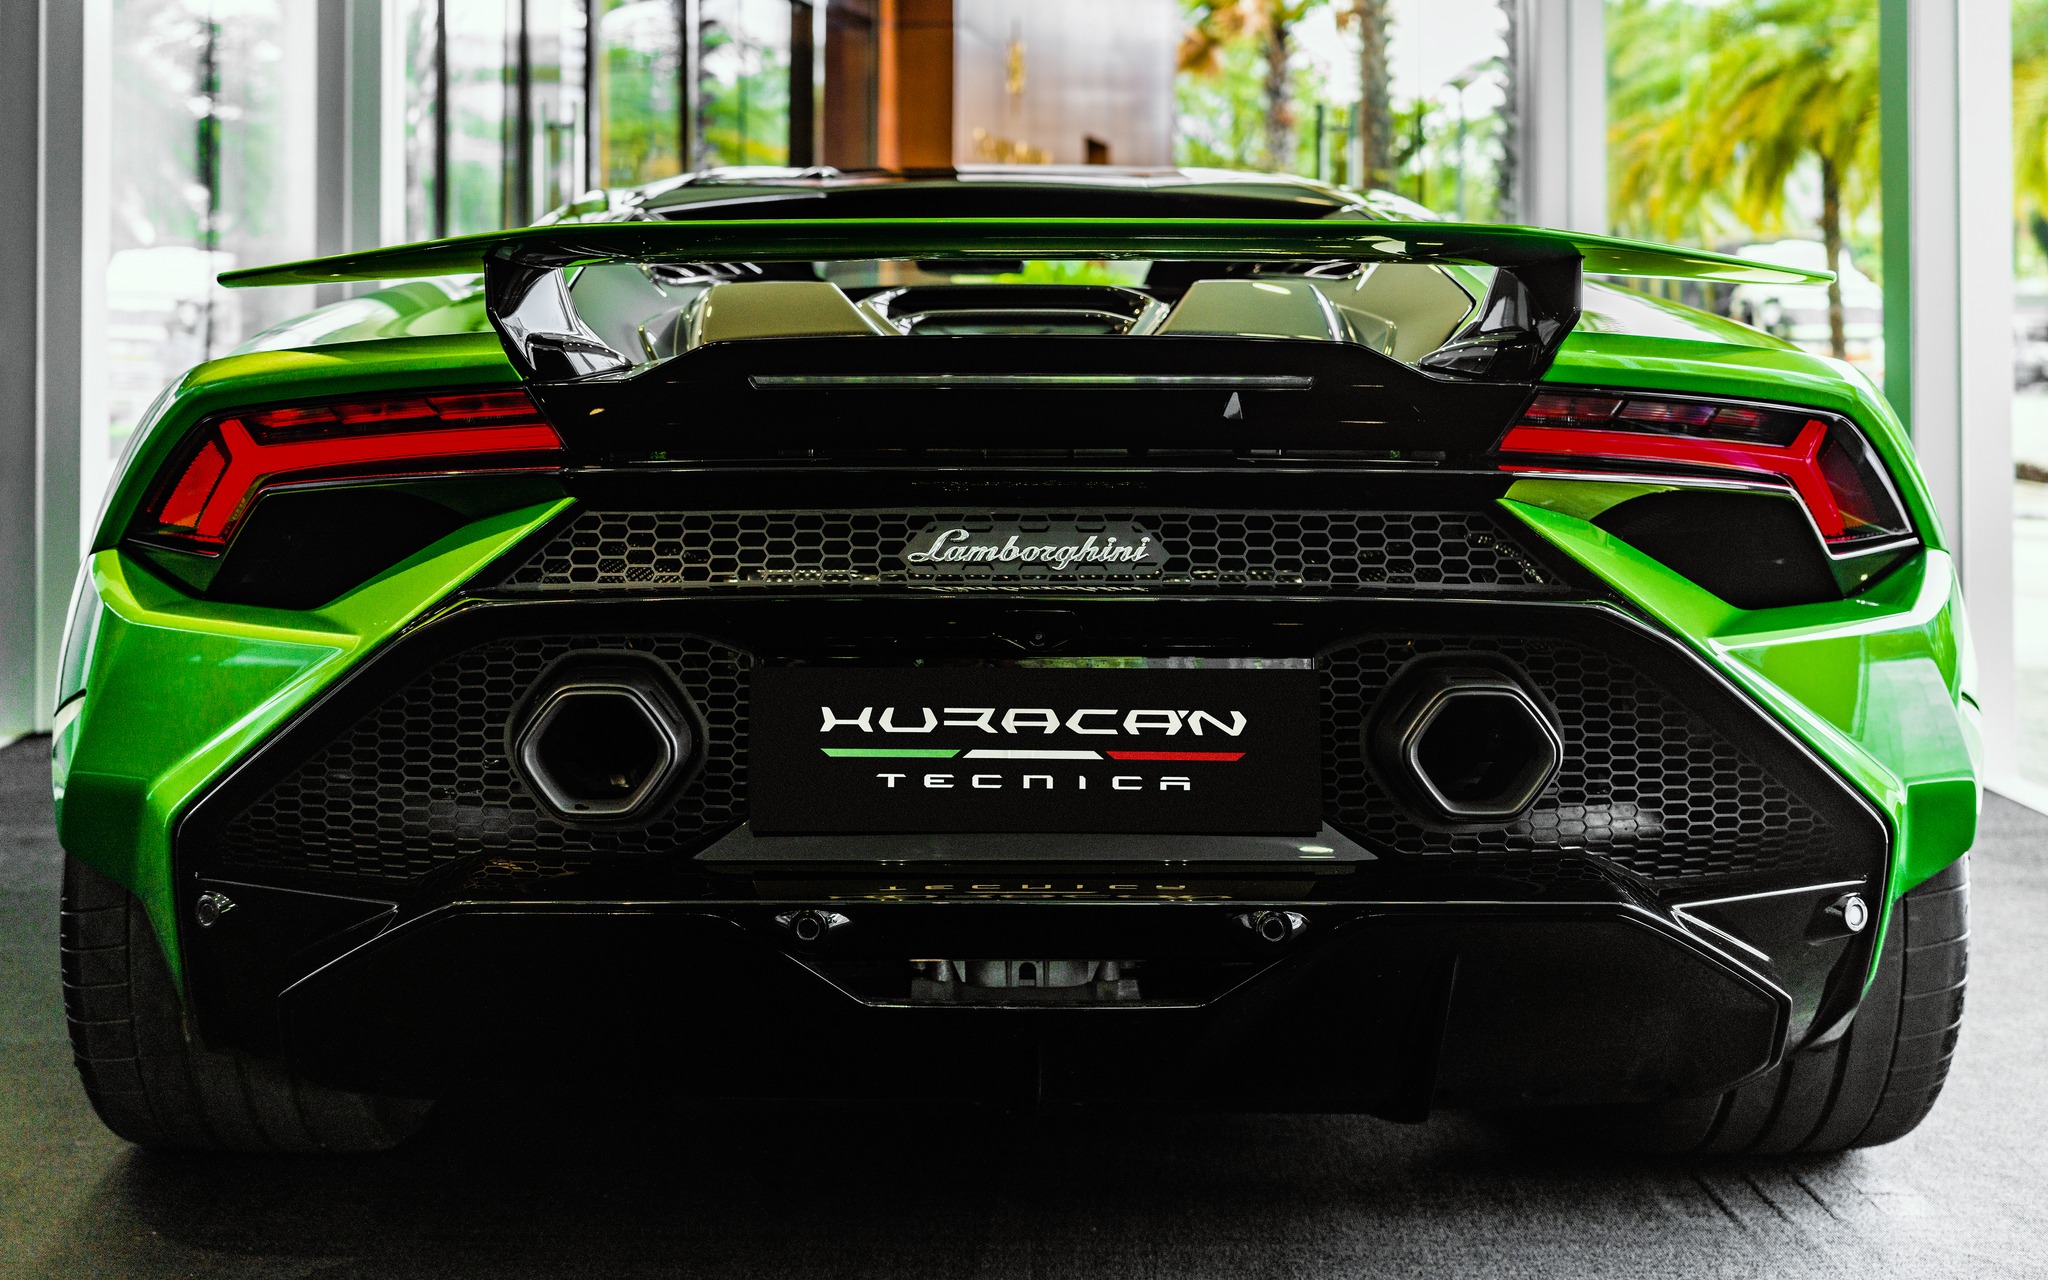 Admire the duo of brands & supercars Lamborghini Huracan Tecnica at Grand Marina, Gallery